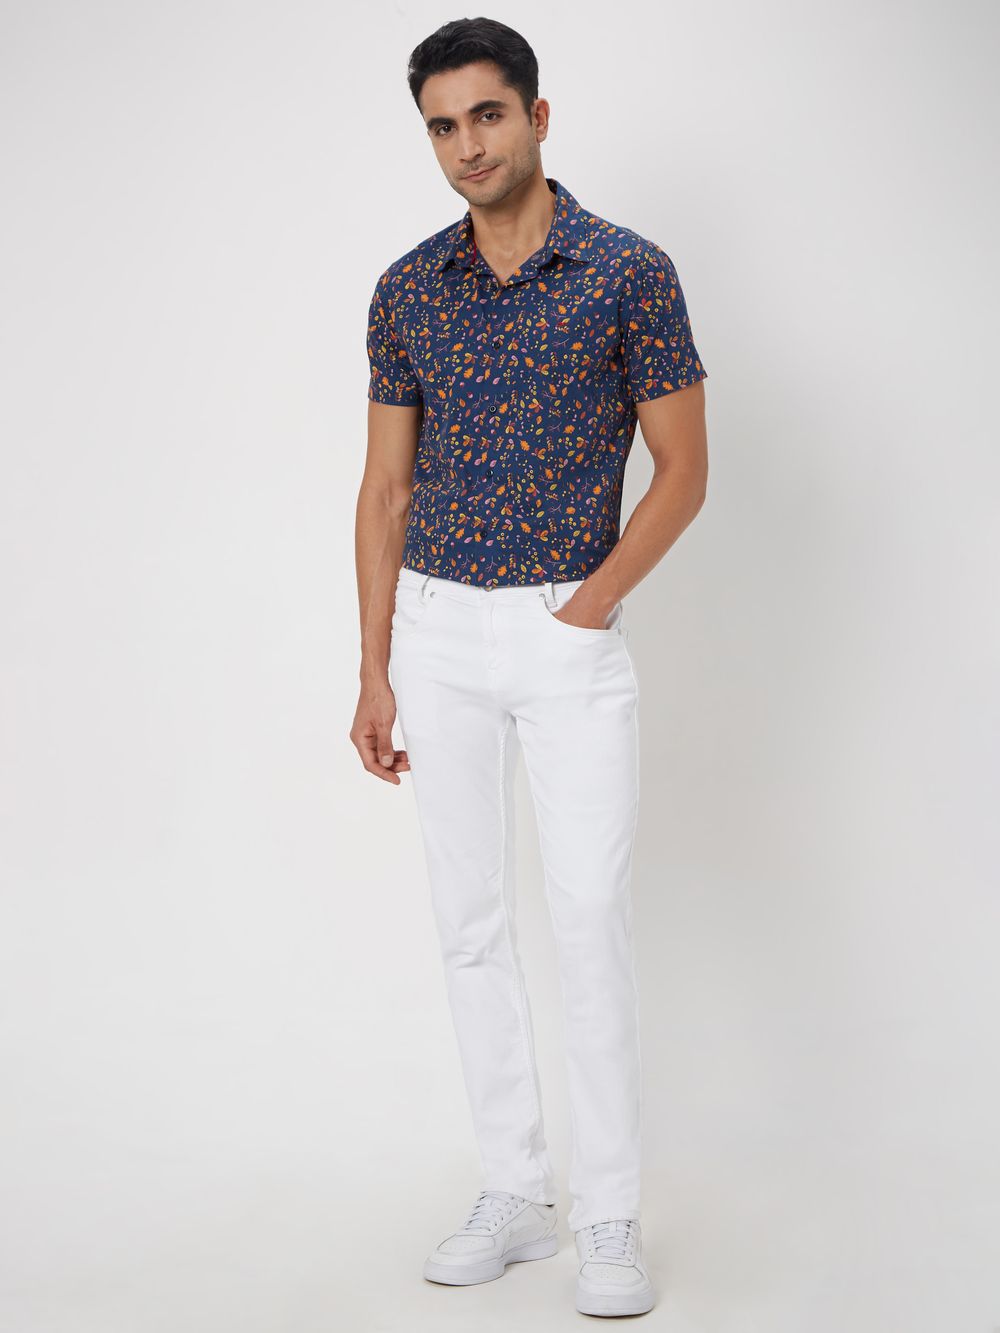 Blue & Multi Floral Print Slim Fit Casual Shirt